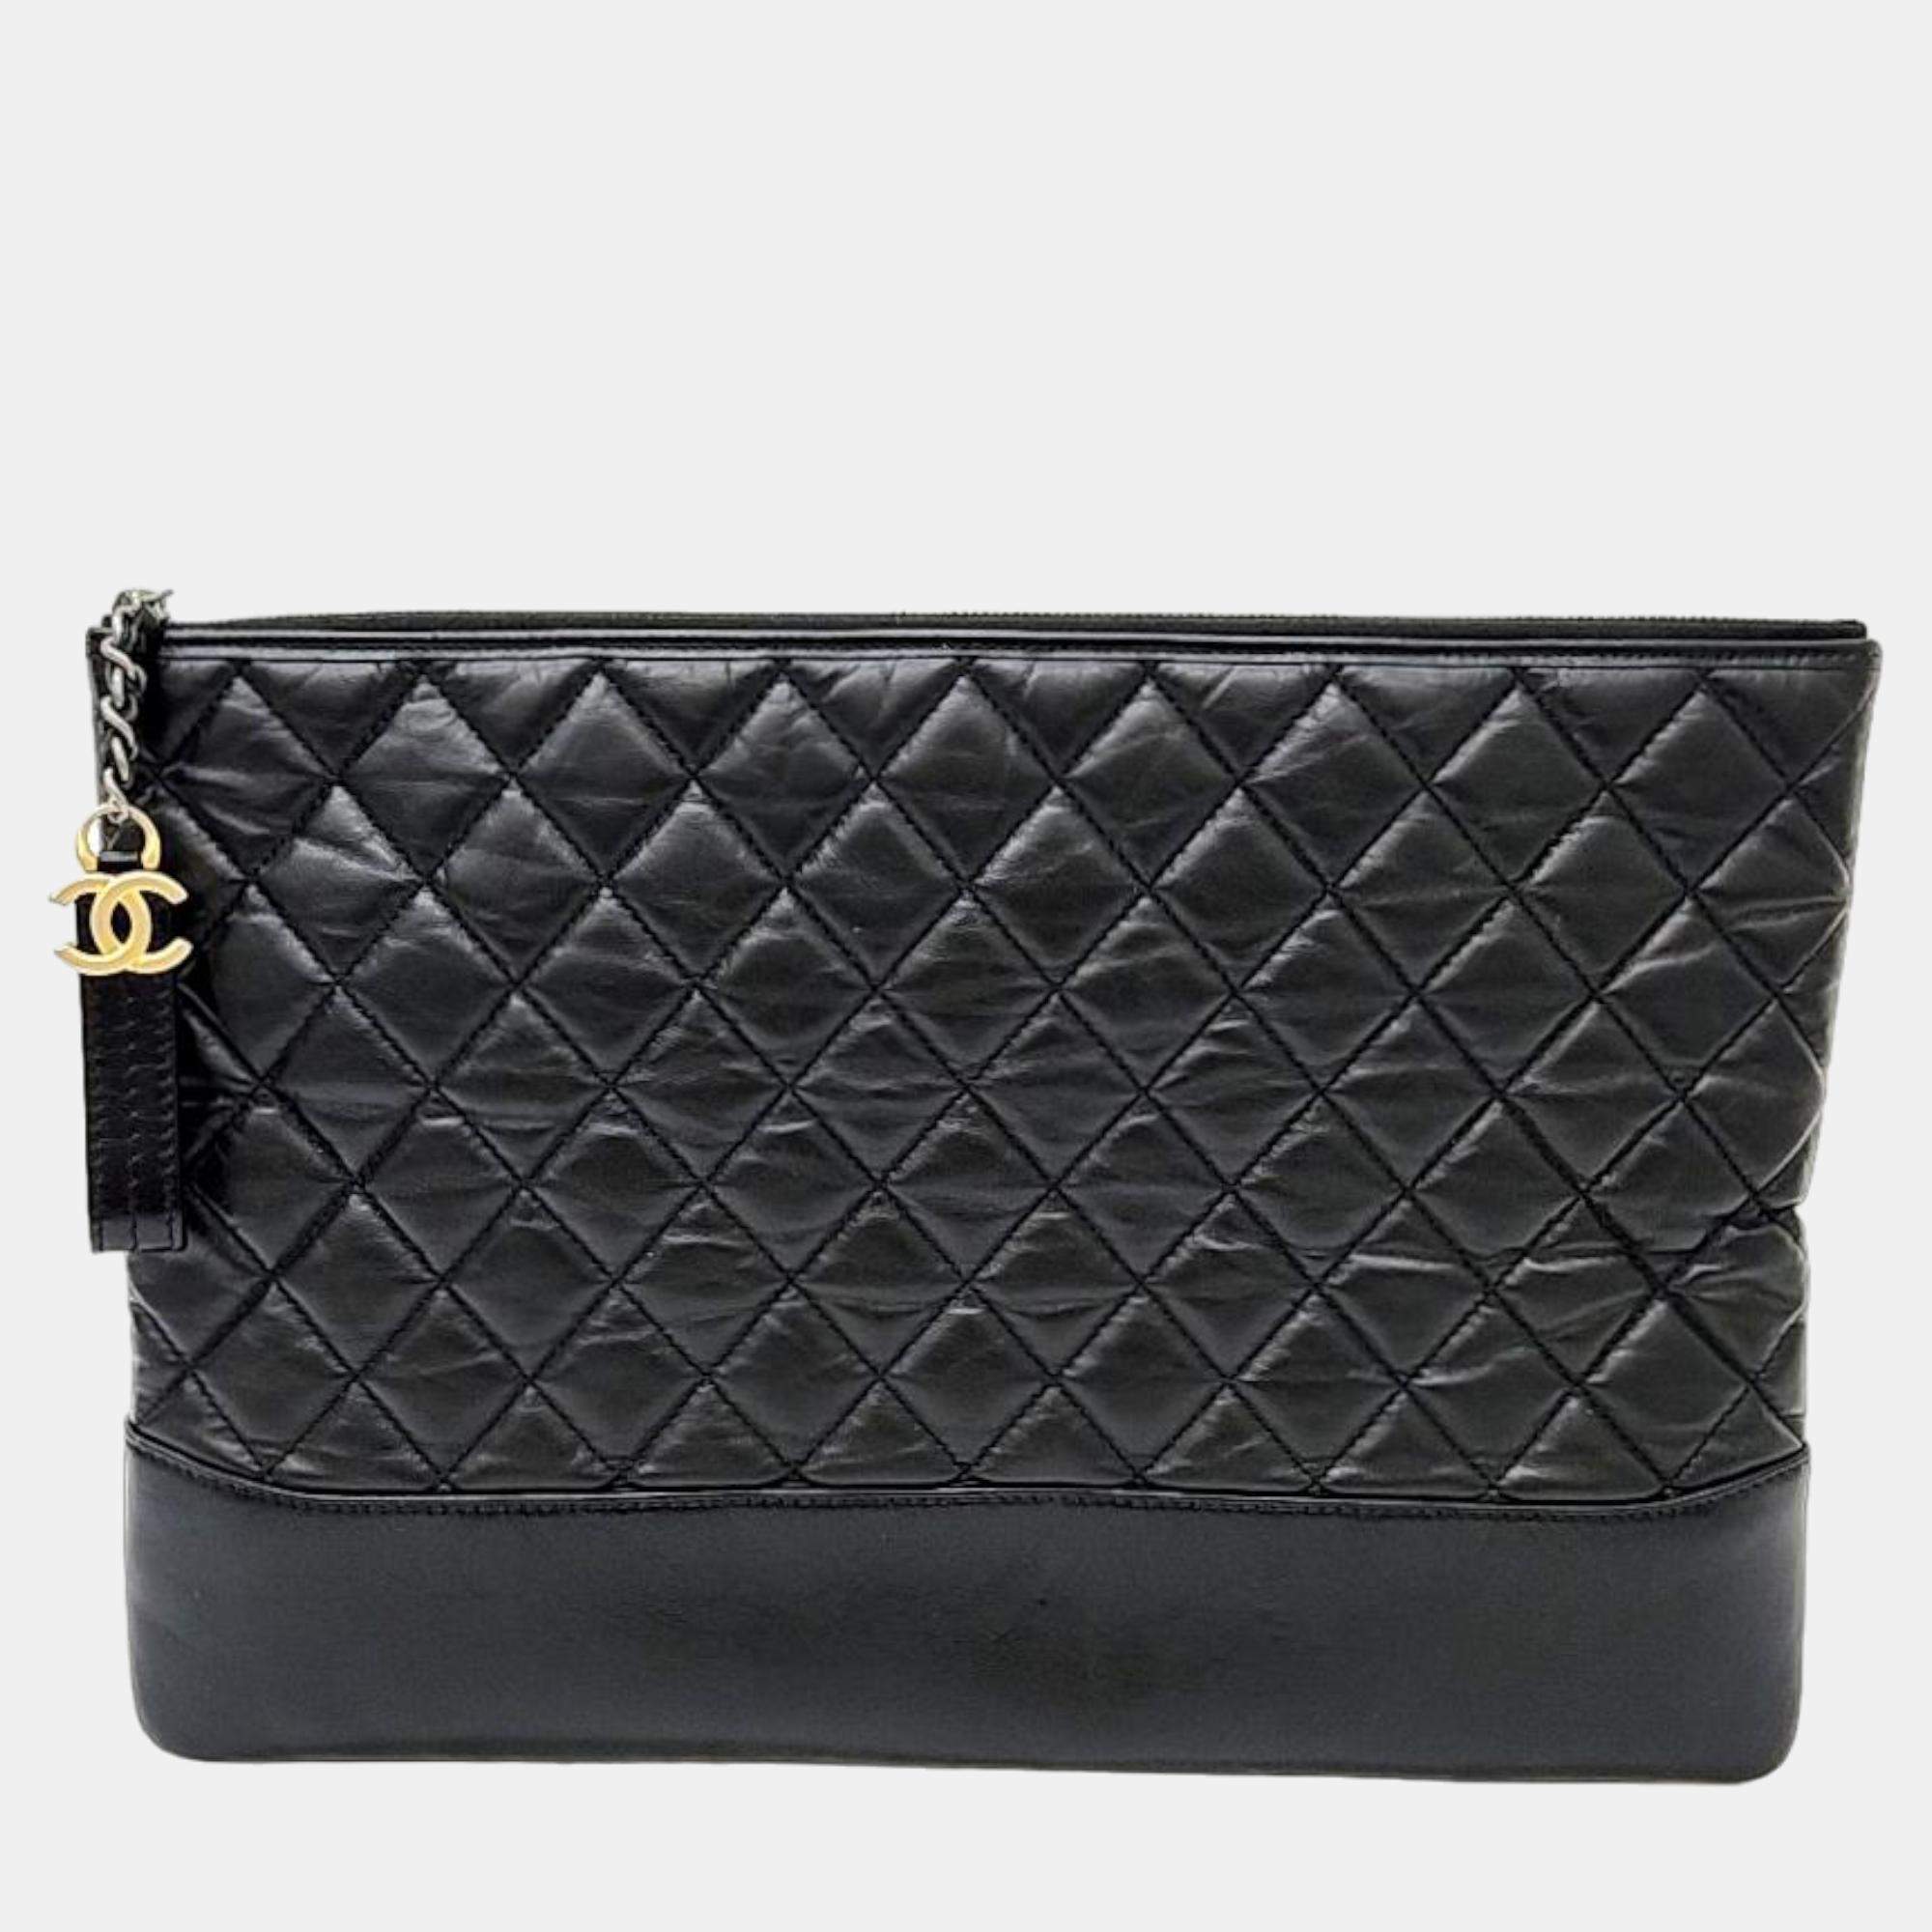 Chanel Black Leather Gabrielle clutch